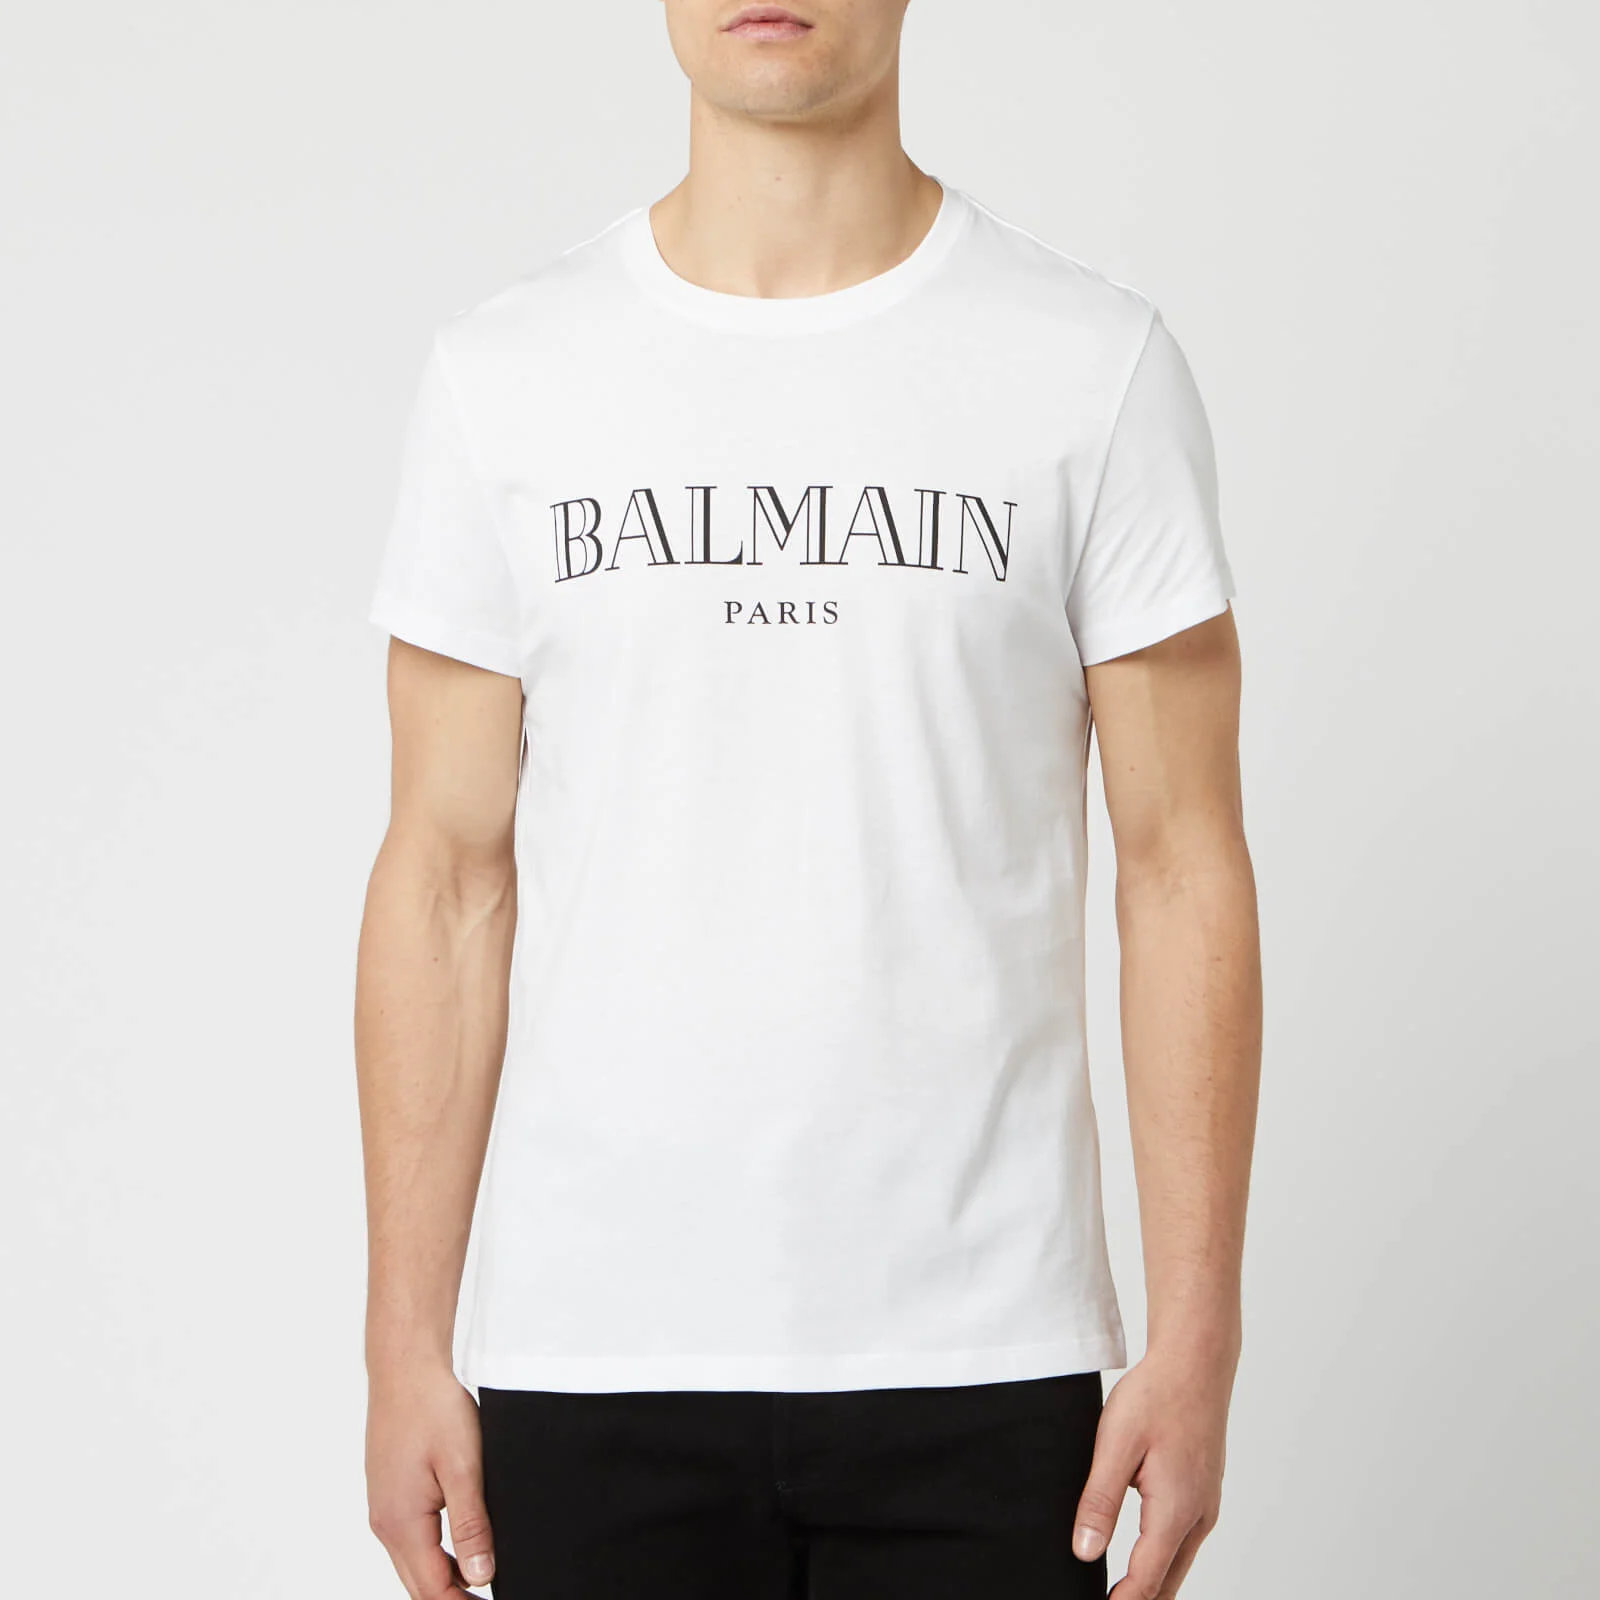 Balmain Men's Paris T-Shirt - Blanc/Noir Image 1